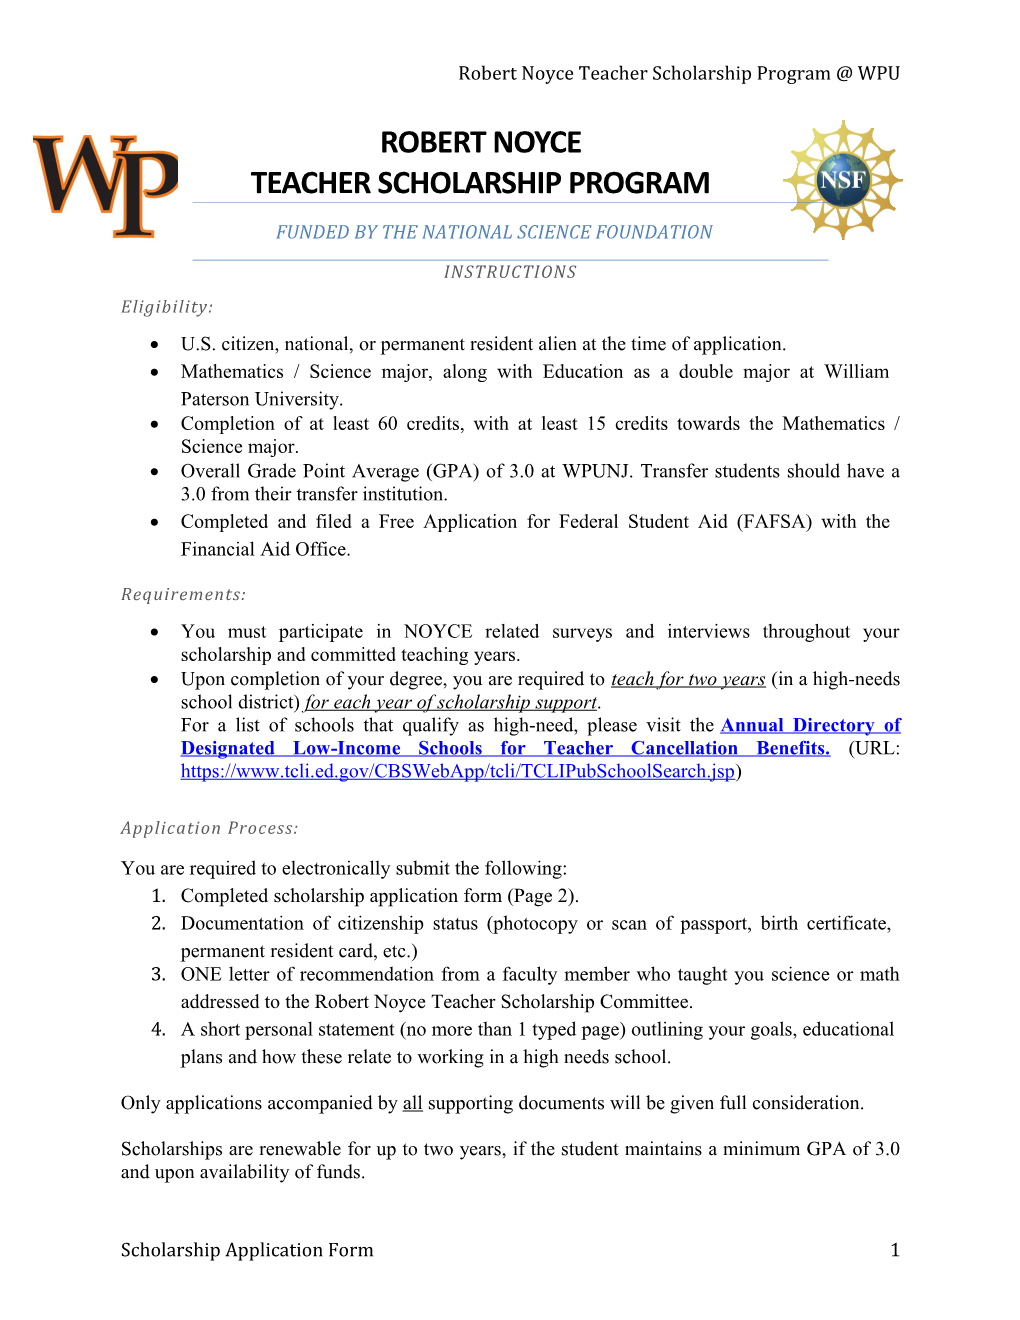 Robert Noyce Teacher Scholarship Program WPU